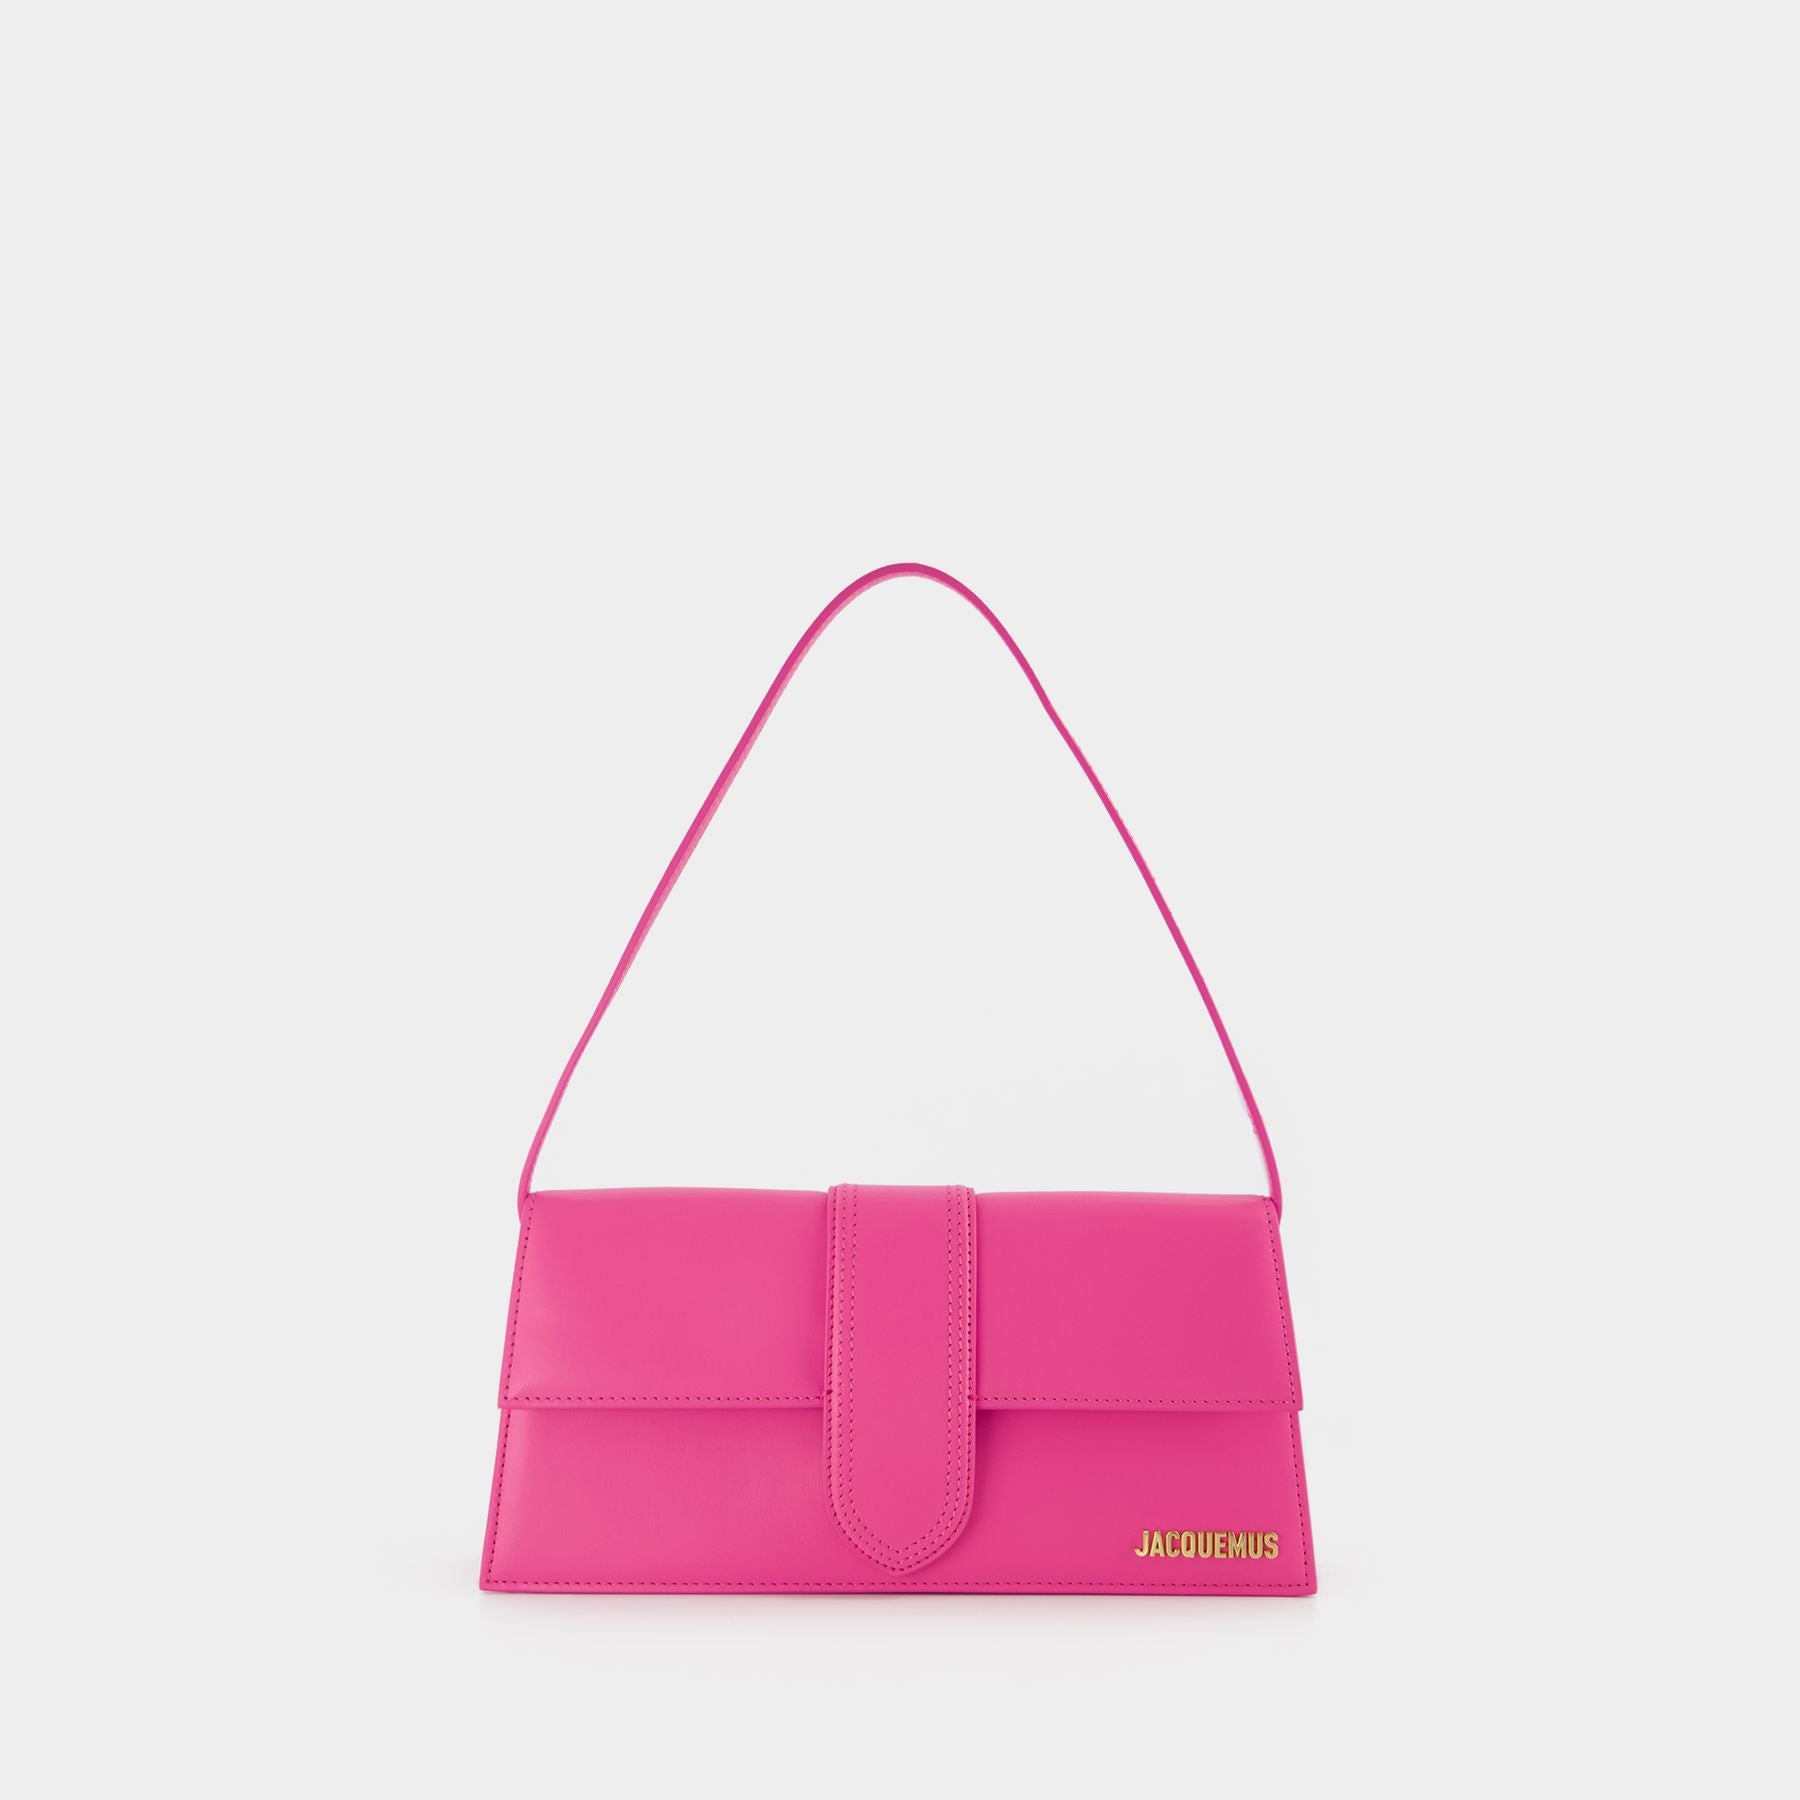 Jacquemus Le Grand Chiquito Bag Neon Pink, Satchel